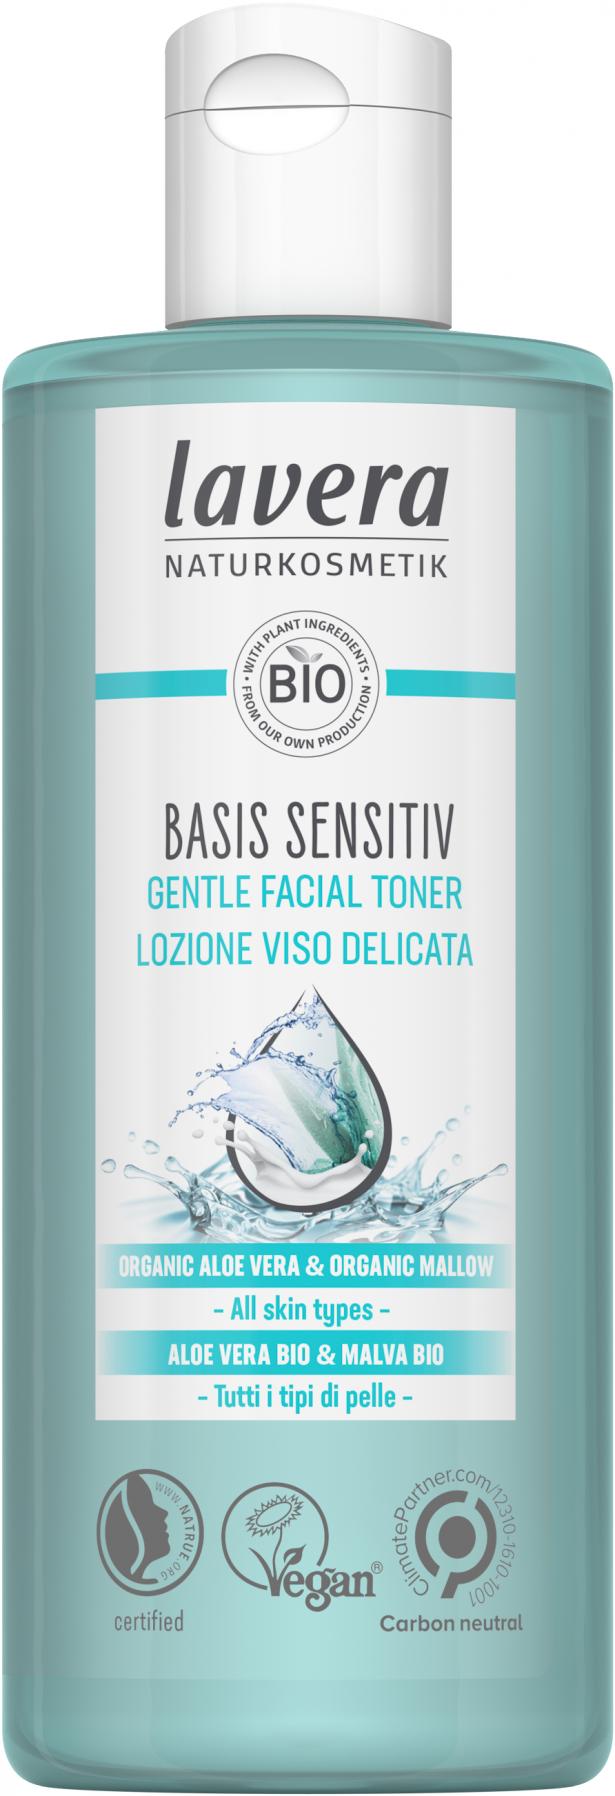 Lavera Basis Sensitiv Gentle Facial Toner 200ml